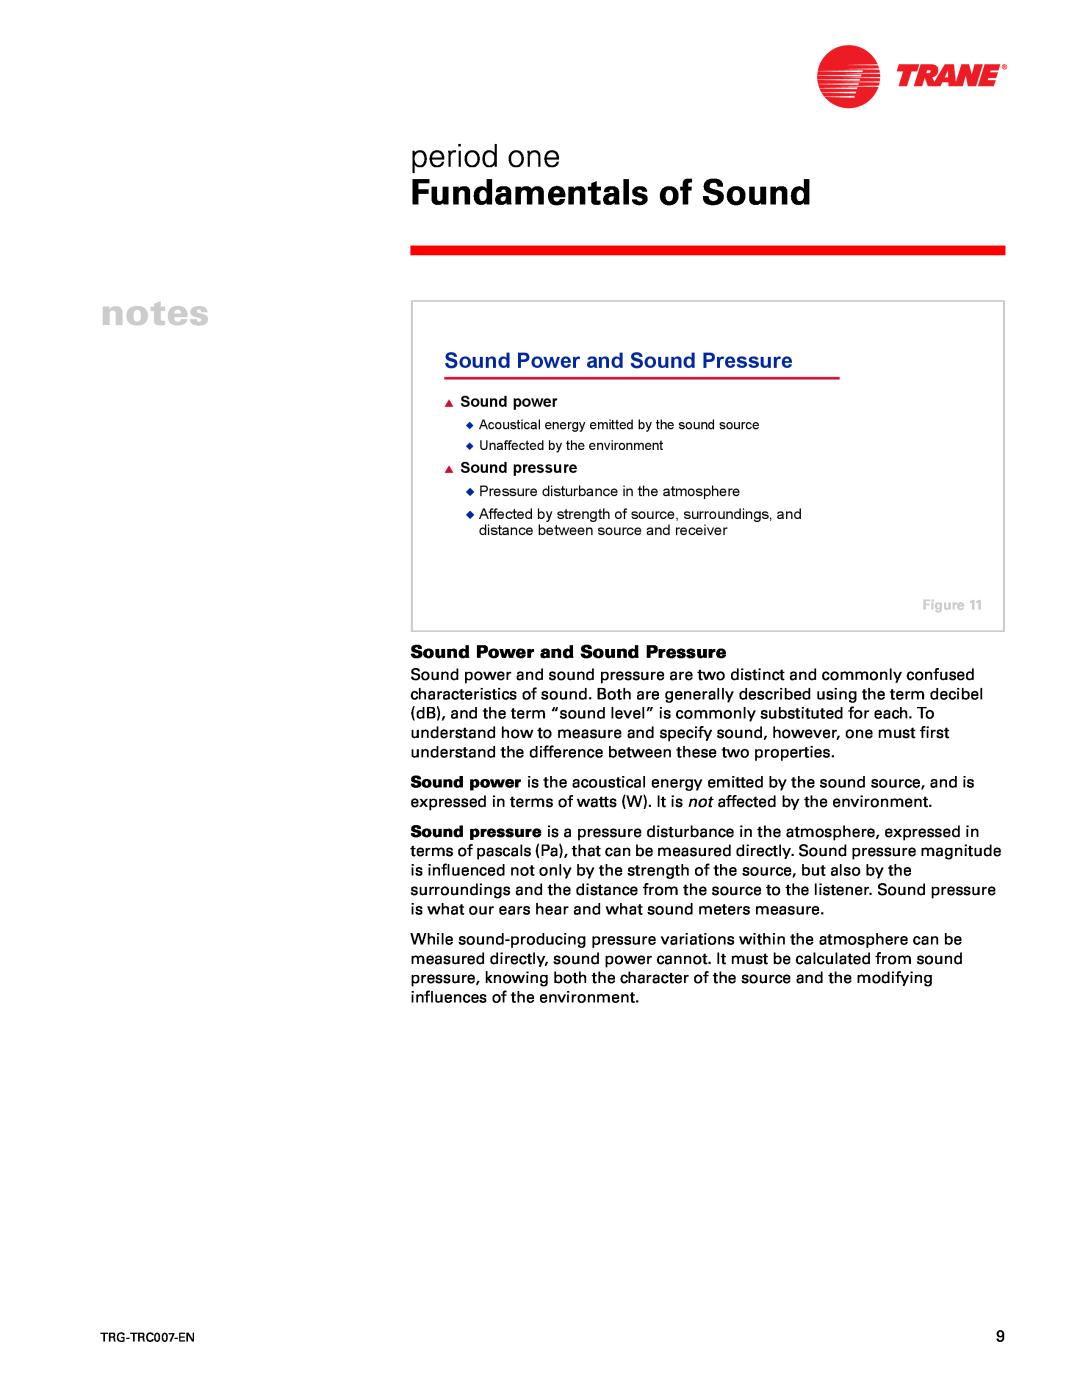 Trane TRG-TRC007-EN manual Sound Power and Sound Pressure, Fundamentals of Sound, period one 